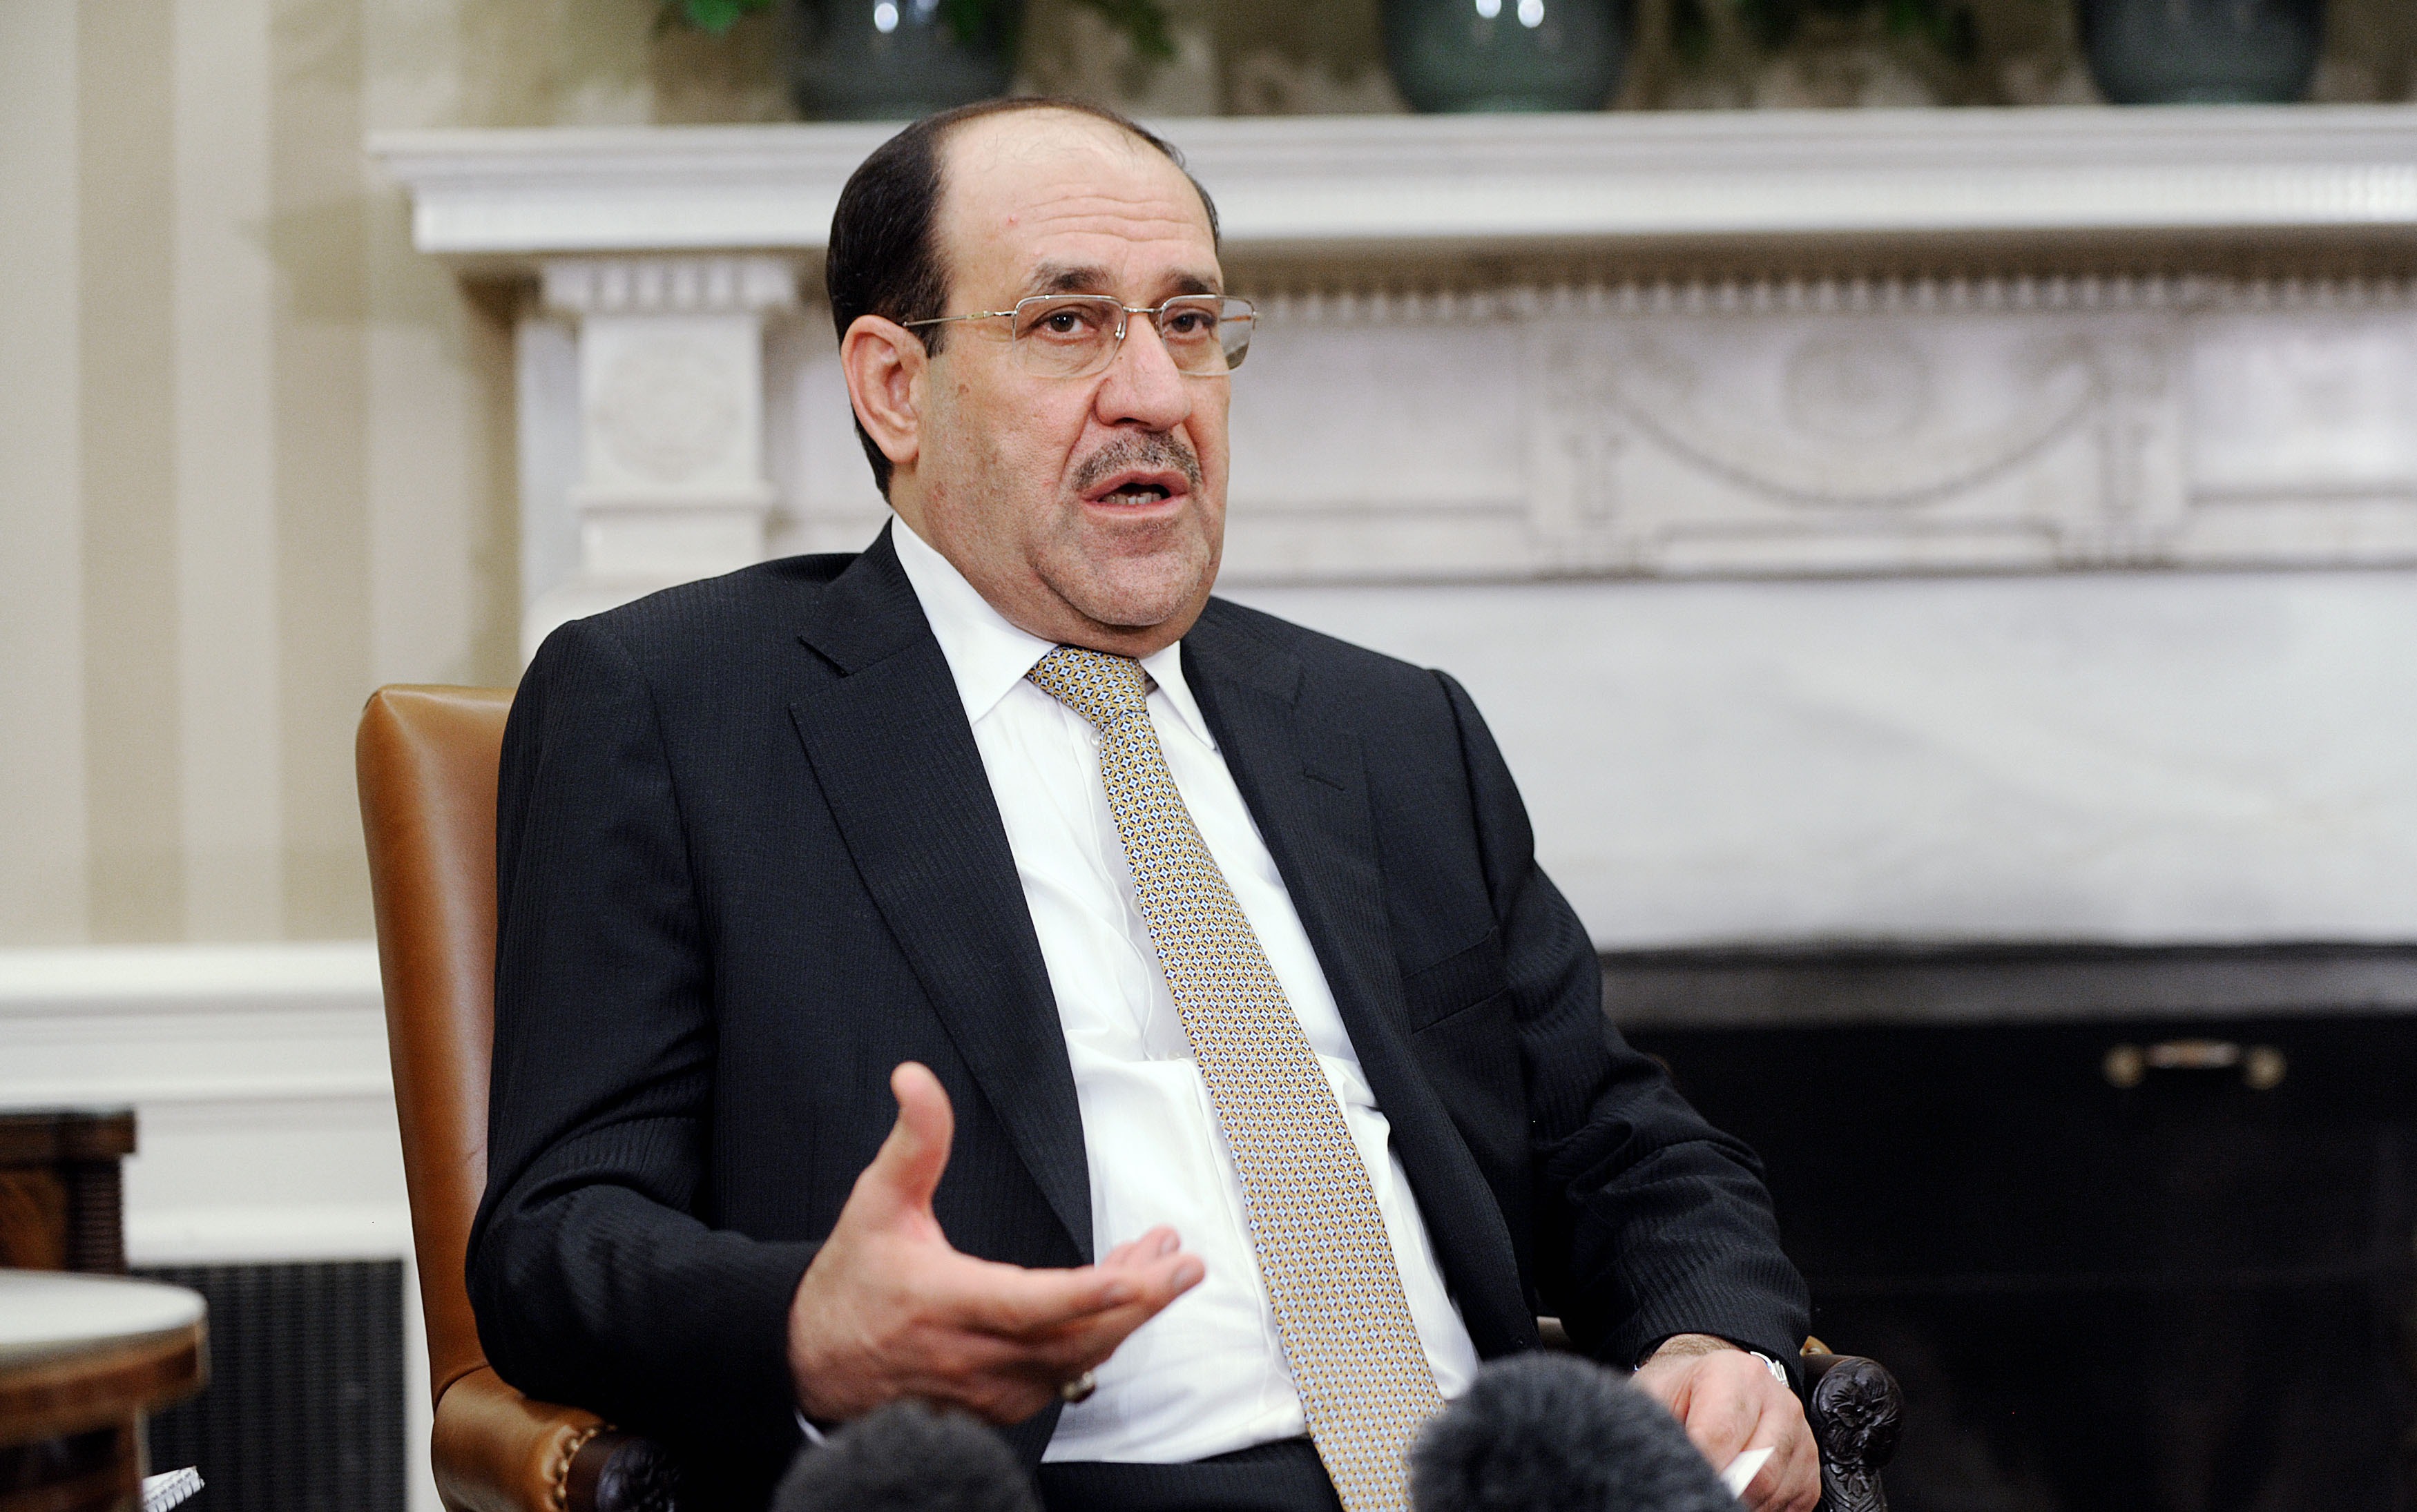 Obama Meets With Iraqi Prime Minister Nouri al-Maliki At White House